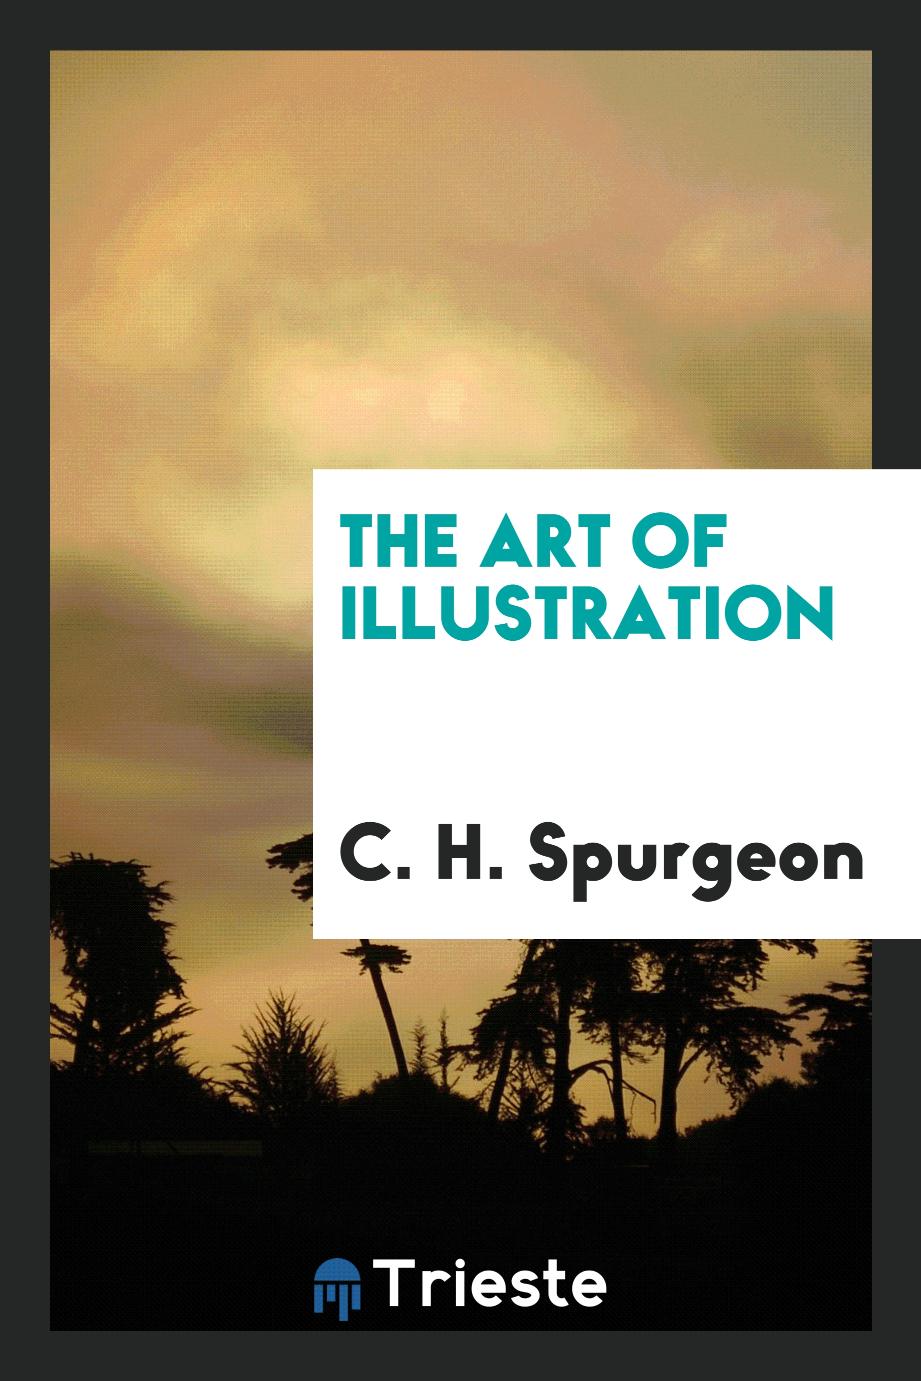 The art of illustration